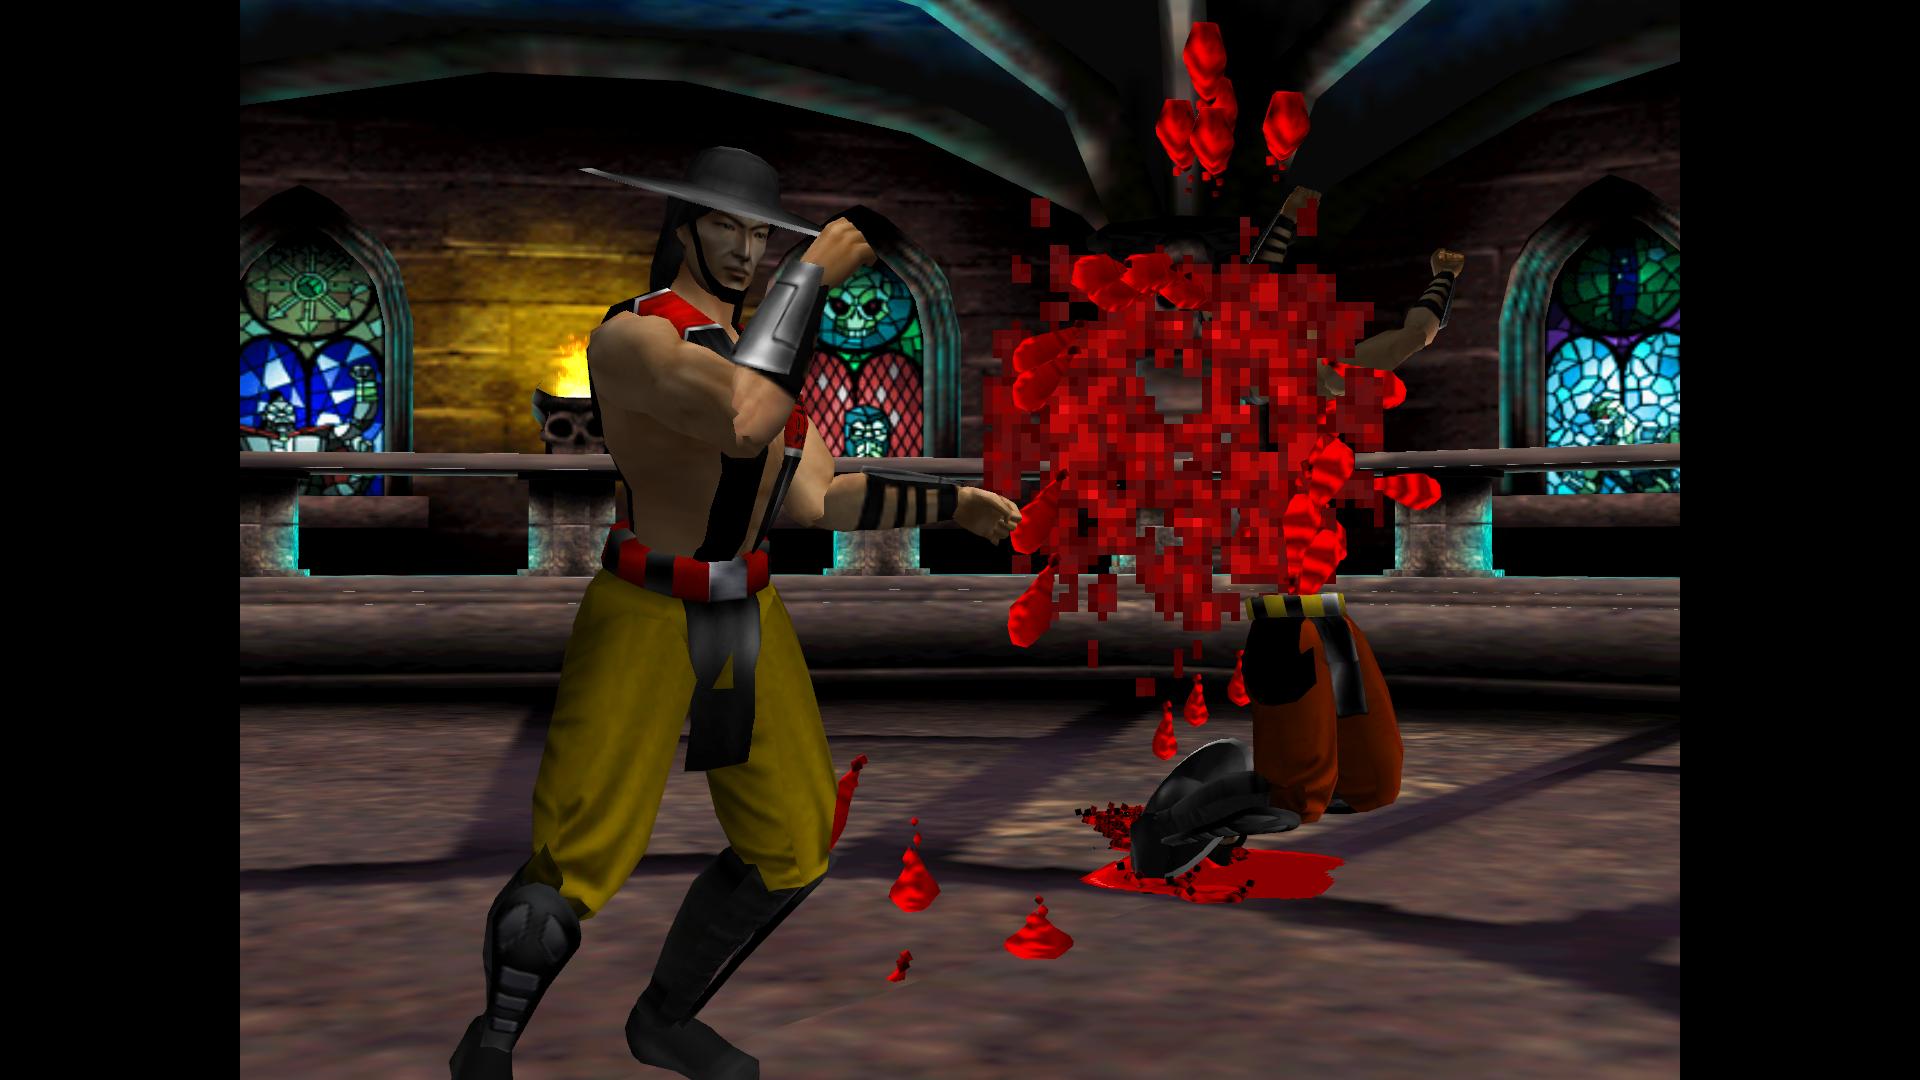 Dreamcast - Mortal Kombat 4 Gold - Scorpion - 3D model by